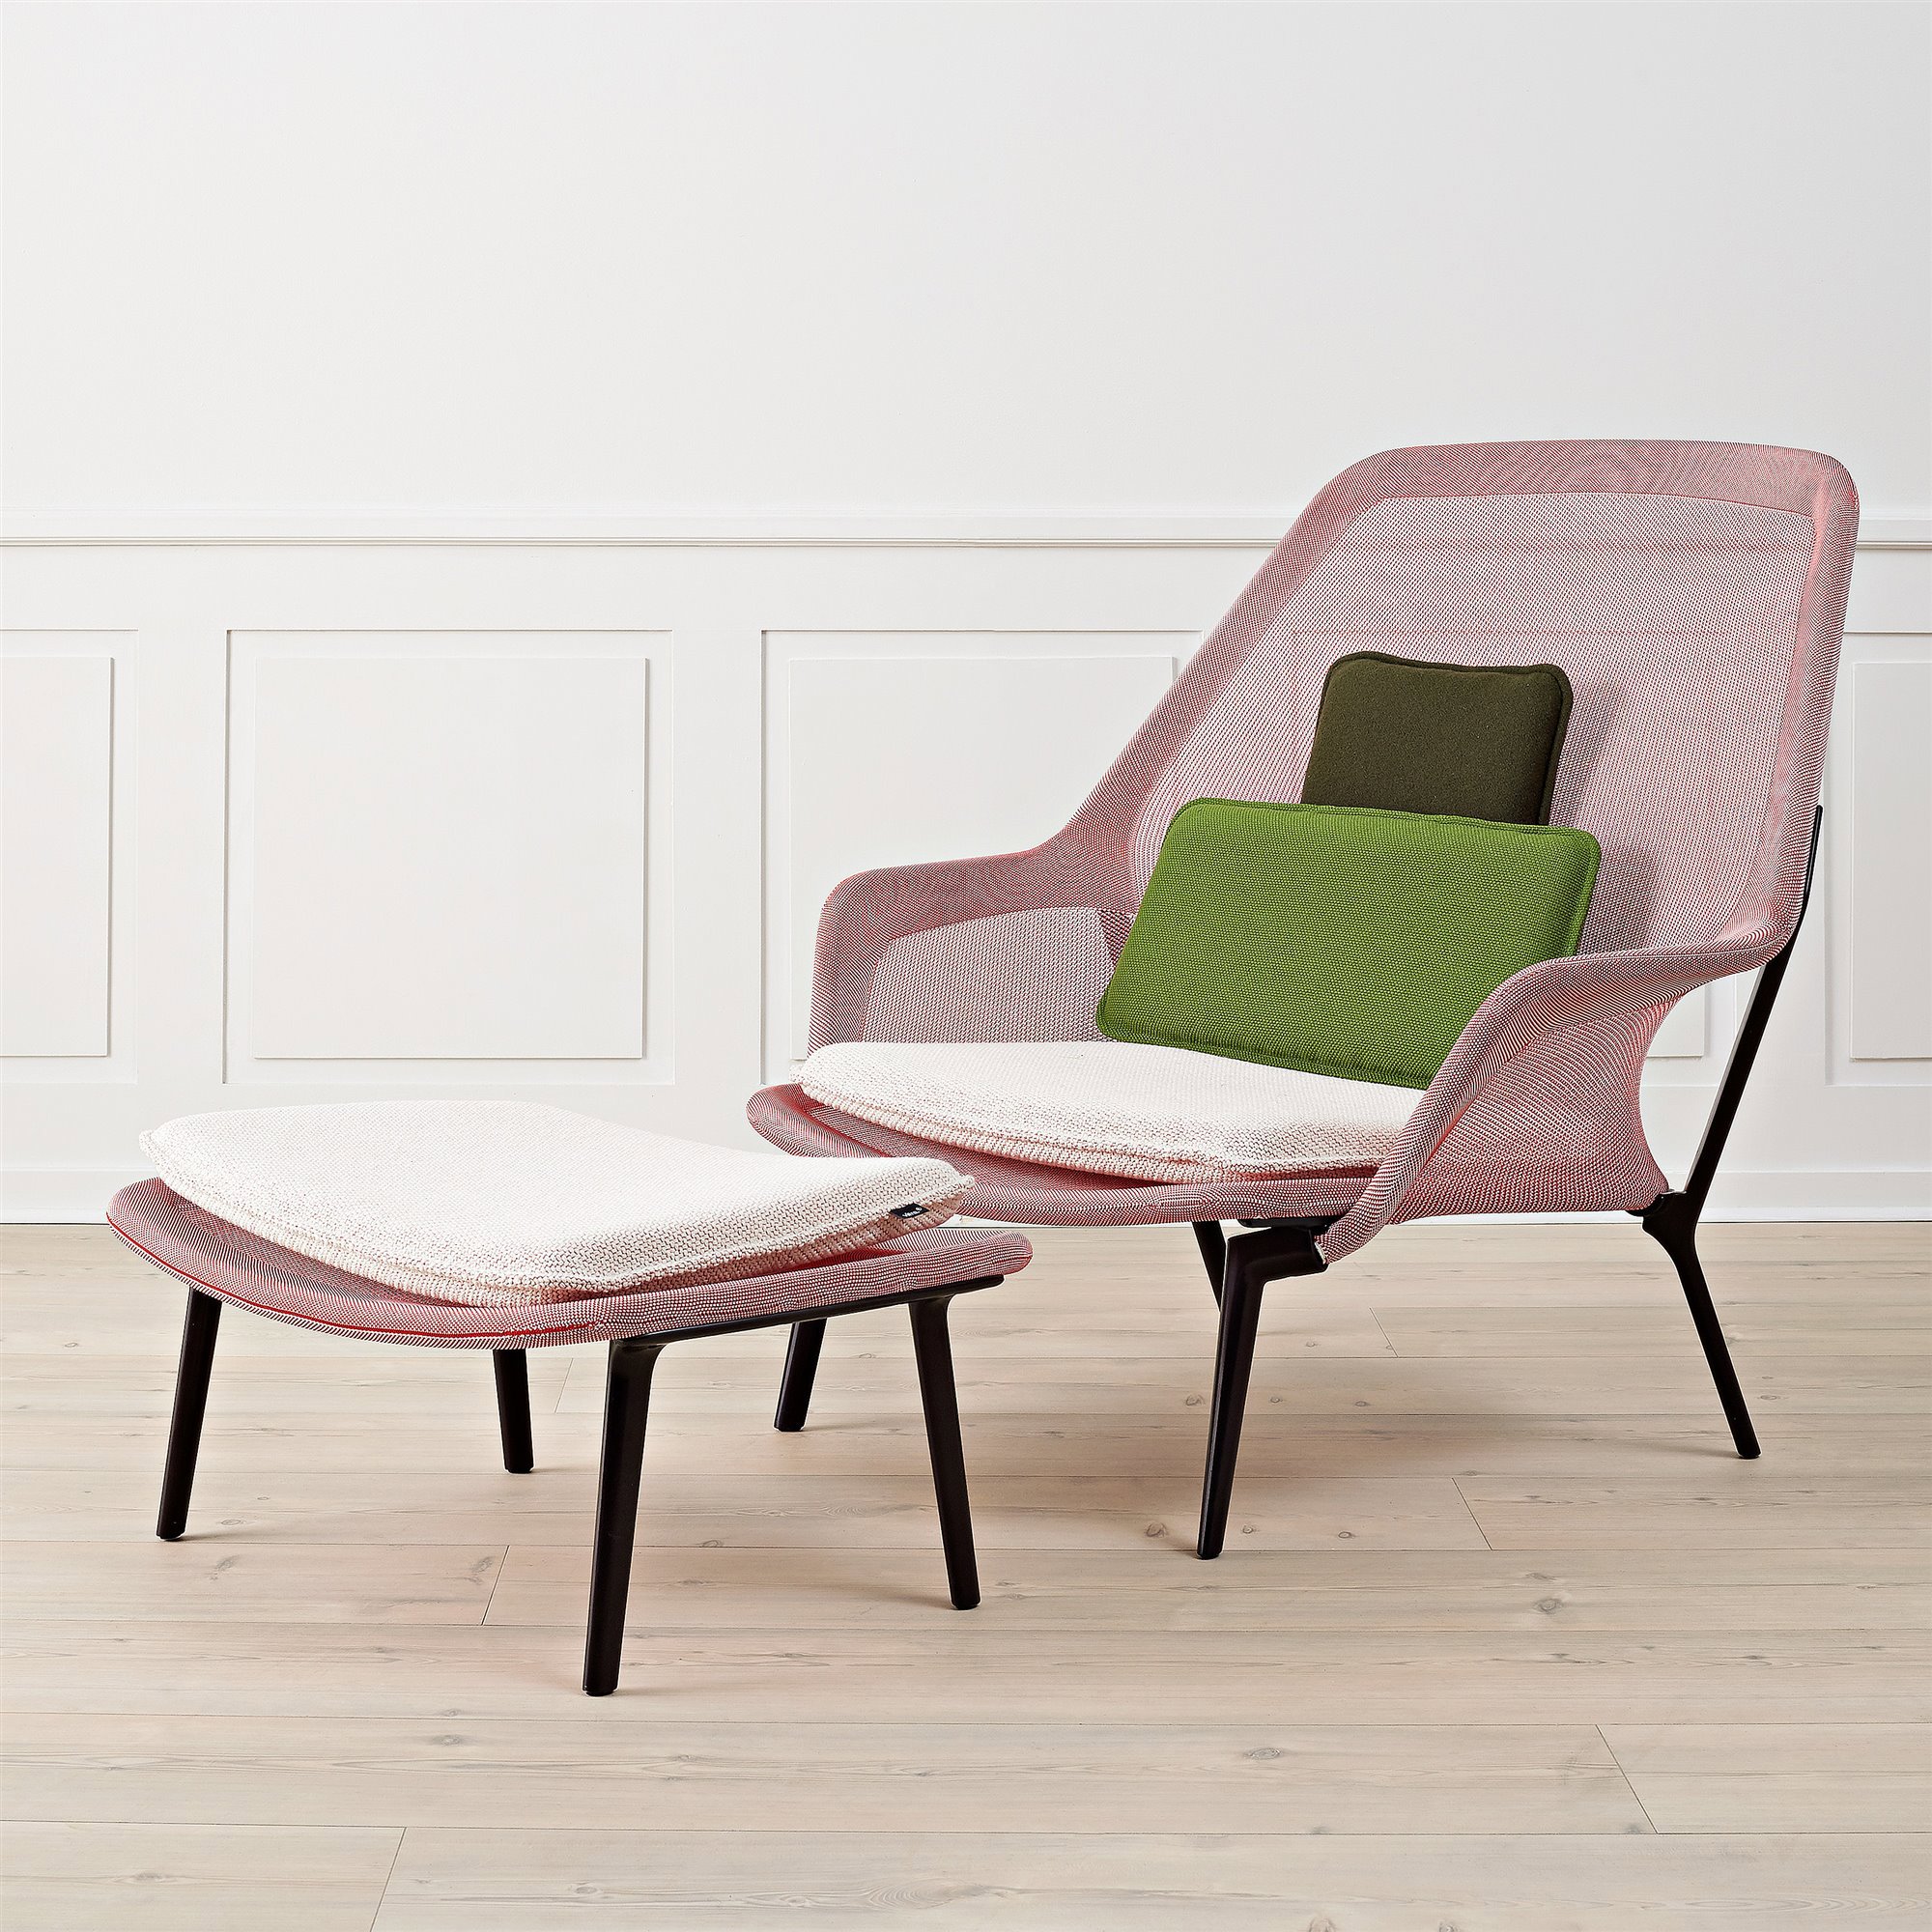 Slow chair Ronan & Erwan Bouroullec color rosa para Vitra